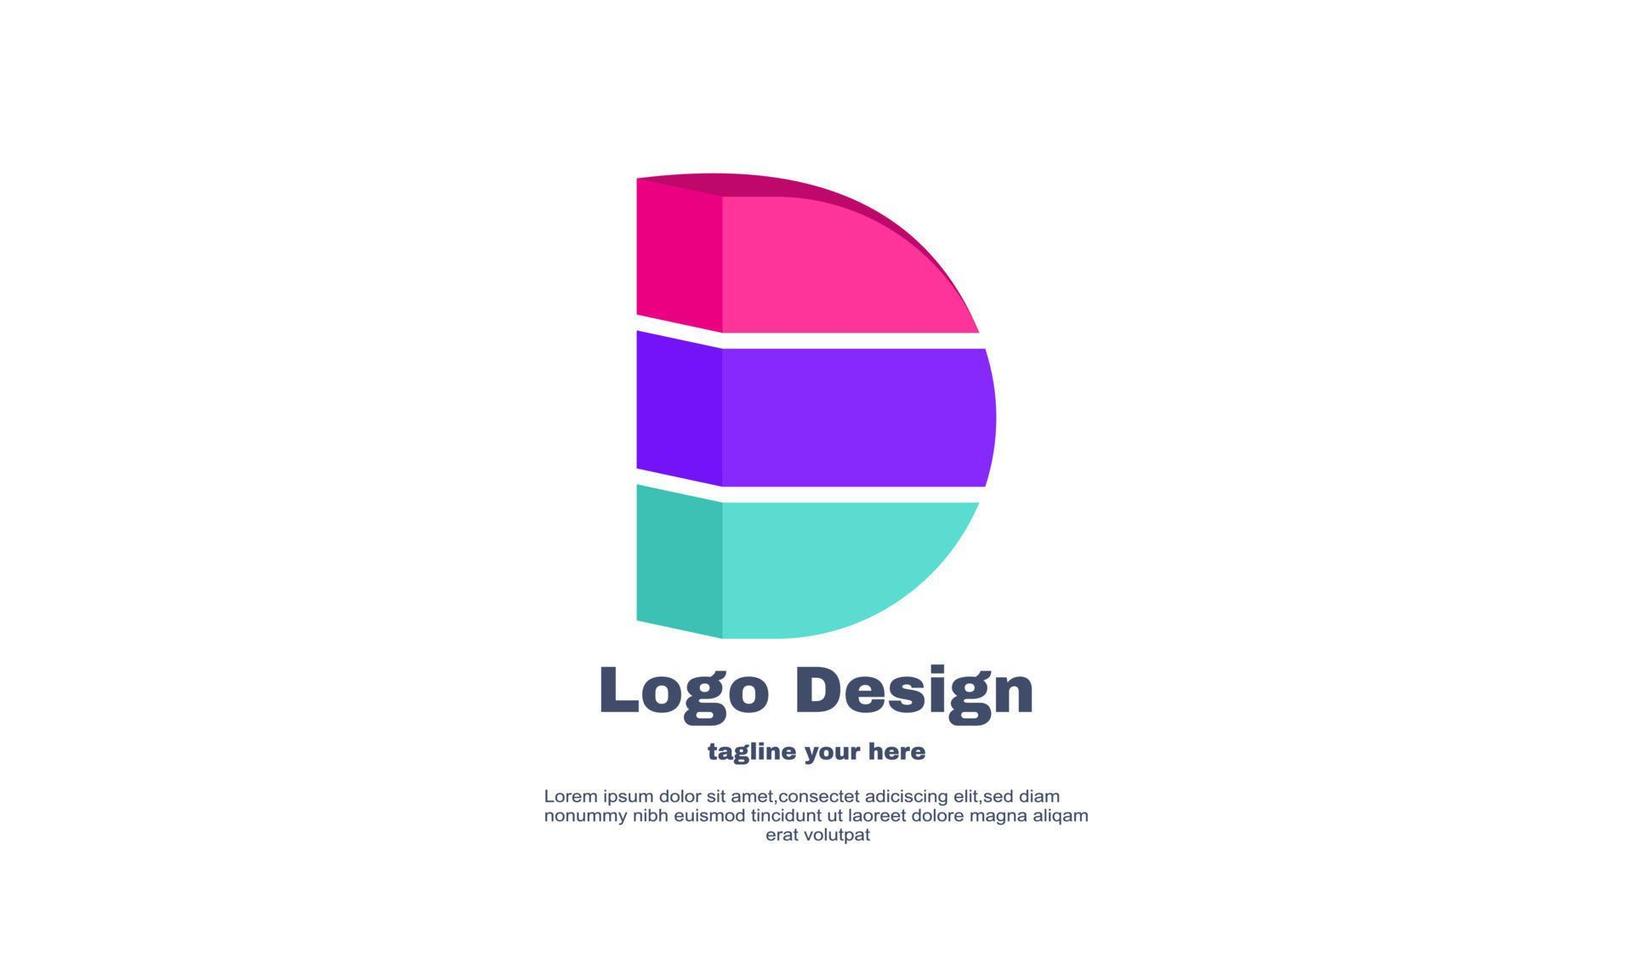 design de símbolo inicial de logotipo d simples exclusivo isolado em vetor